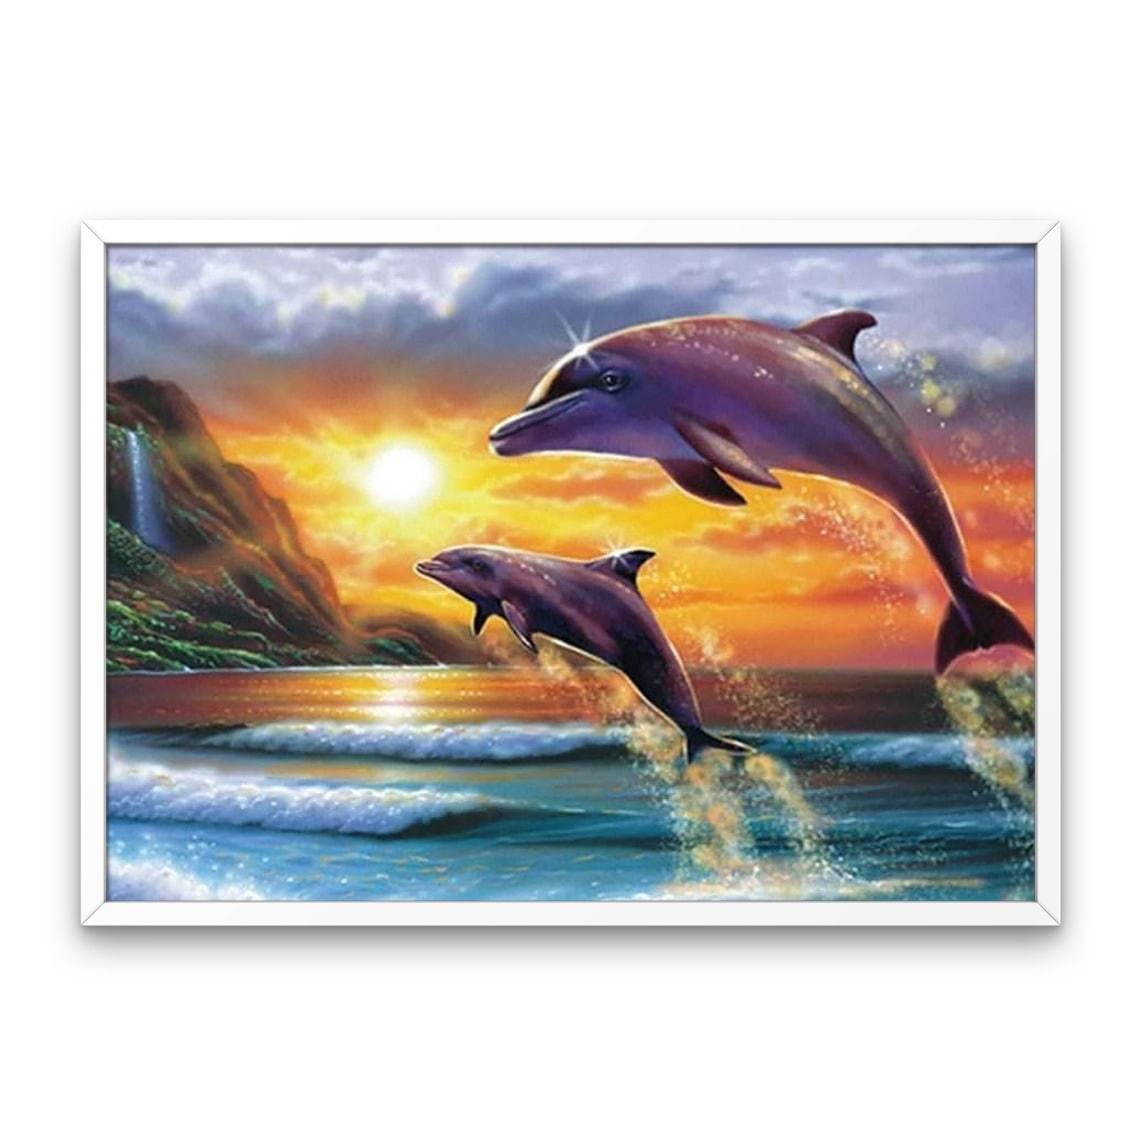 Dolphins at sunset - Diamond Painting Kit